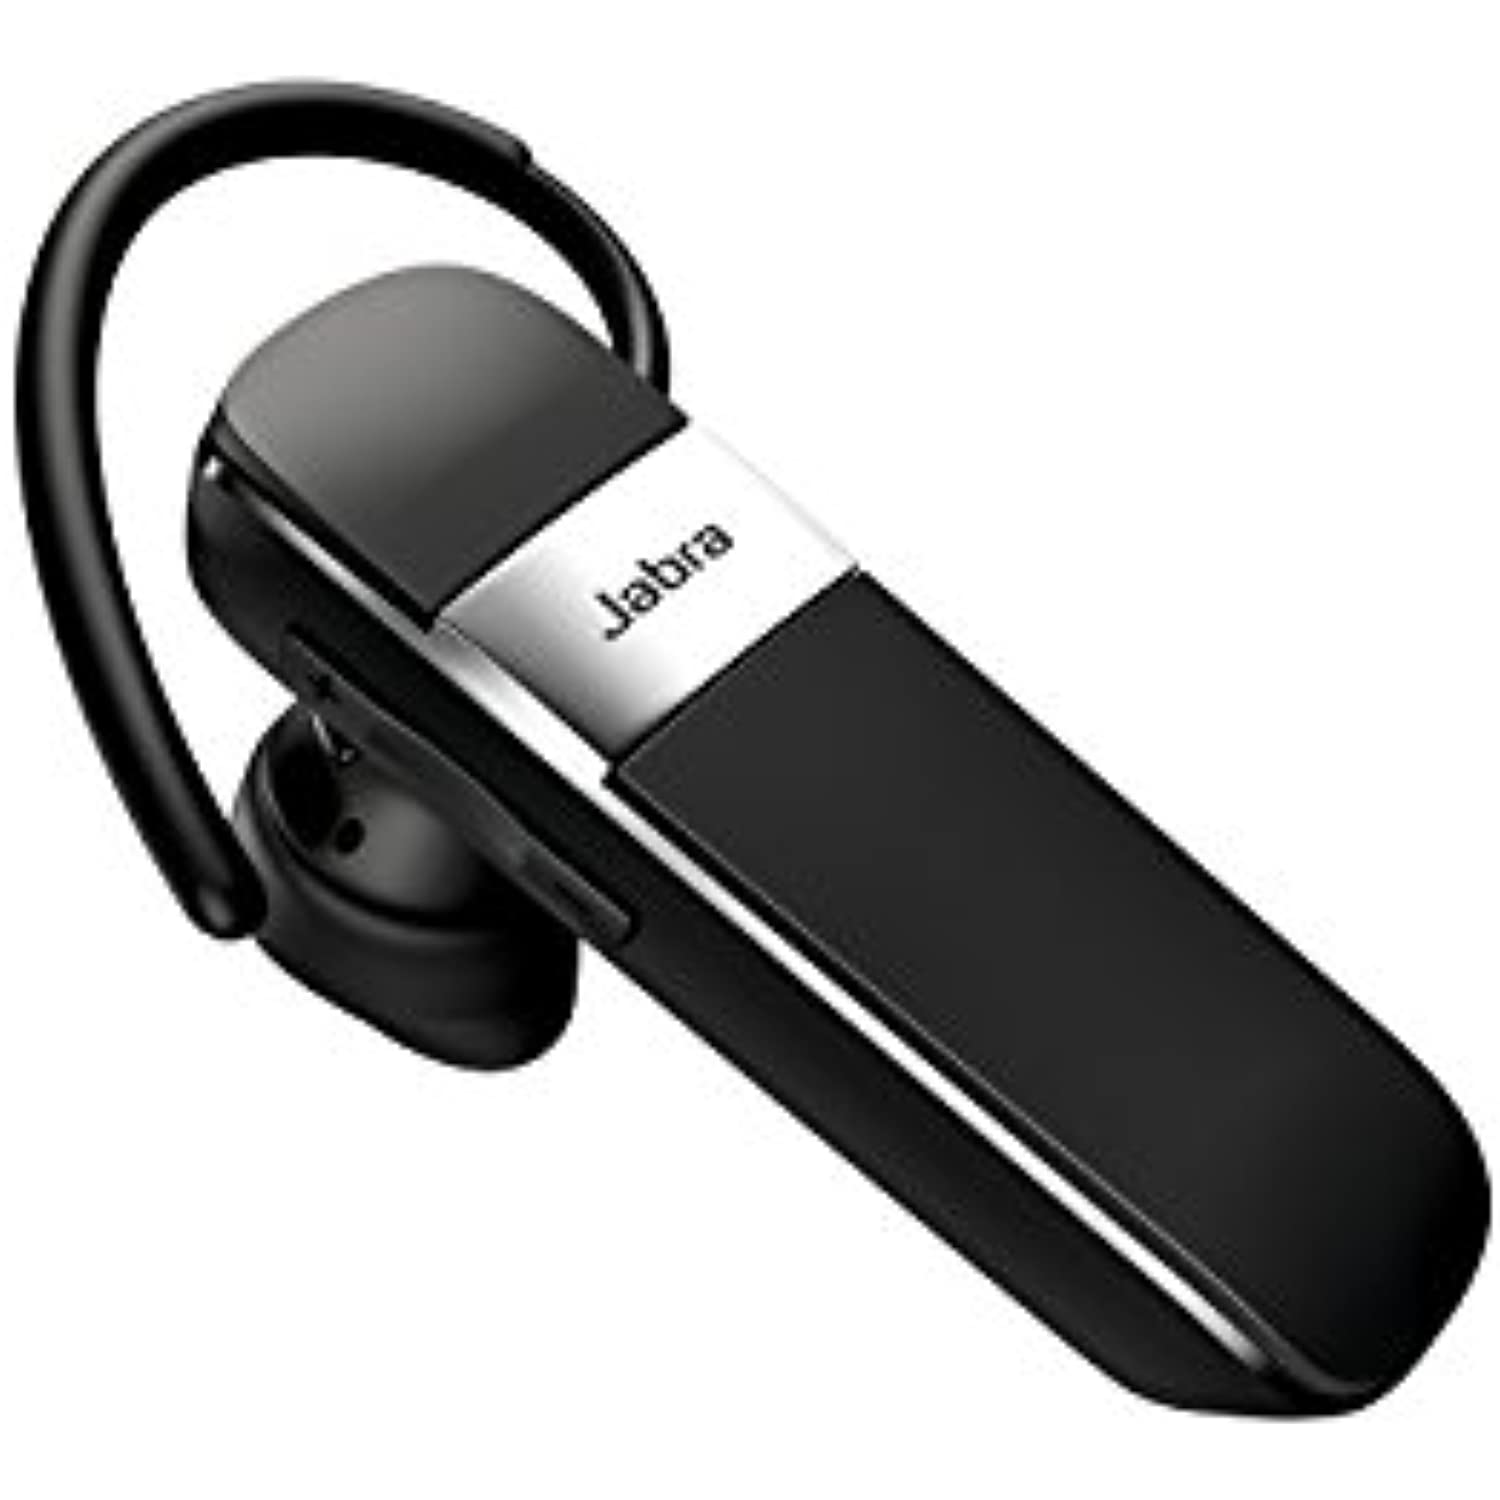 Jabra - 100-92200900-02 Talk 15 Bluetooth Headset - Black/Silver